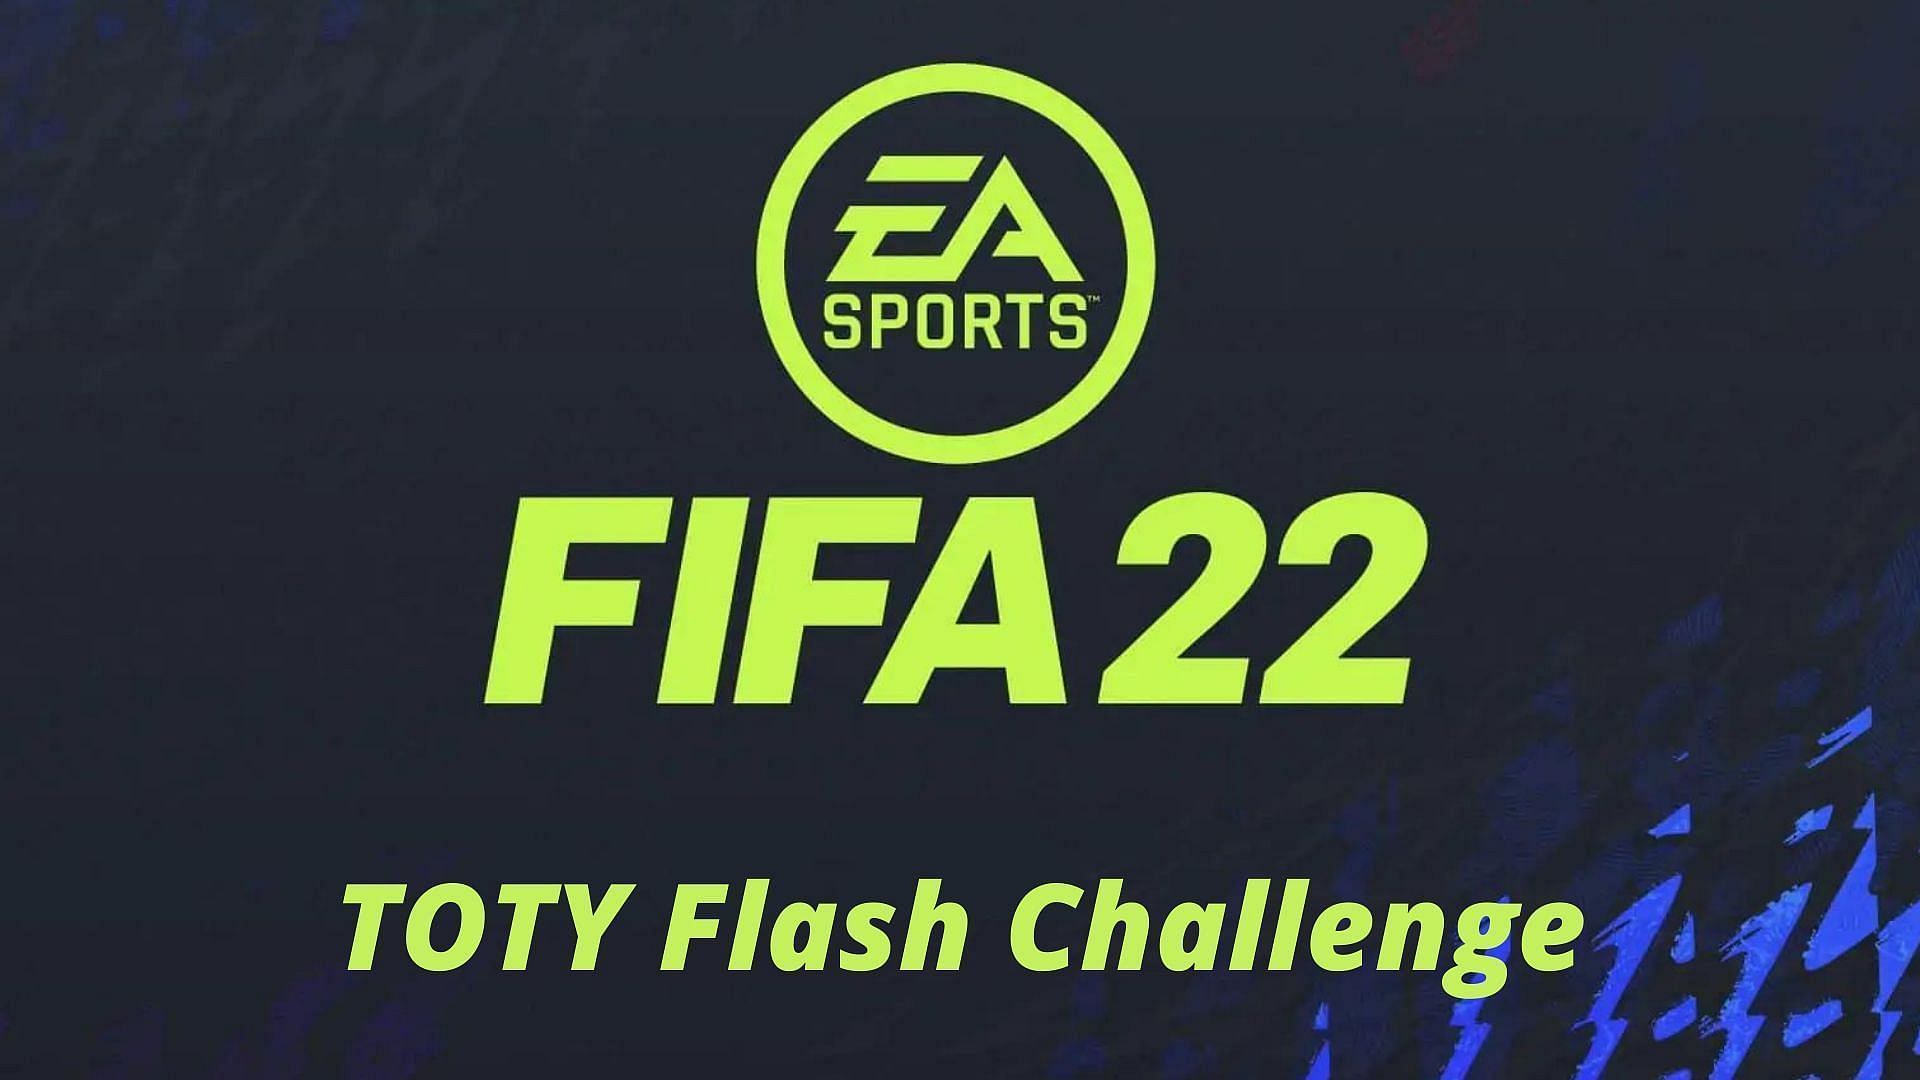 TOTY Flash Challenge 1 SBC is live in FIFA 22 (Image via Sportskeeda)